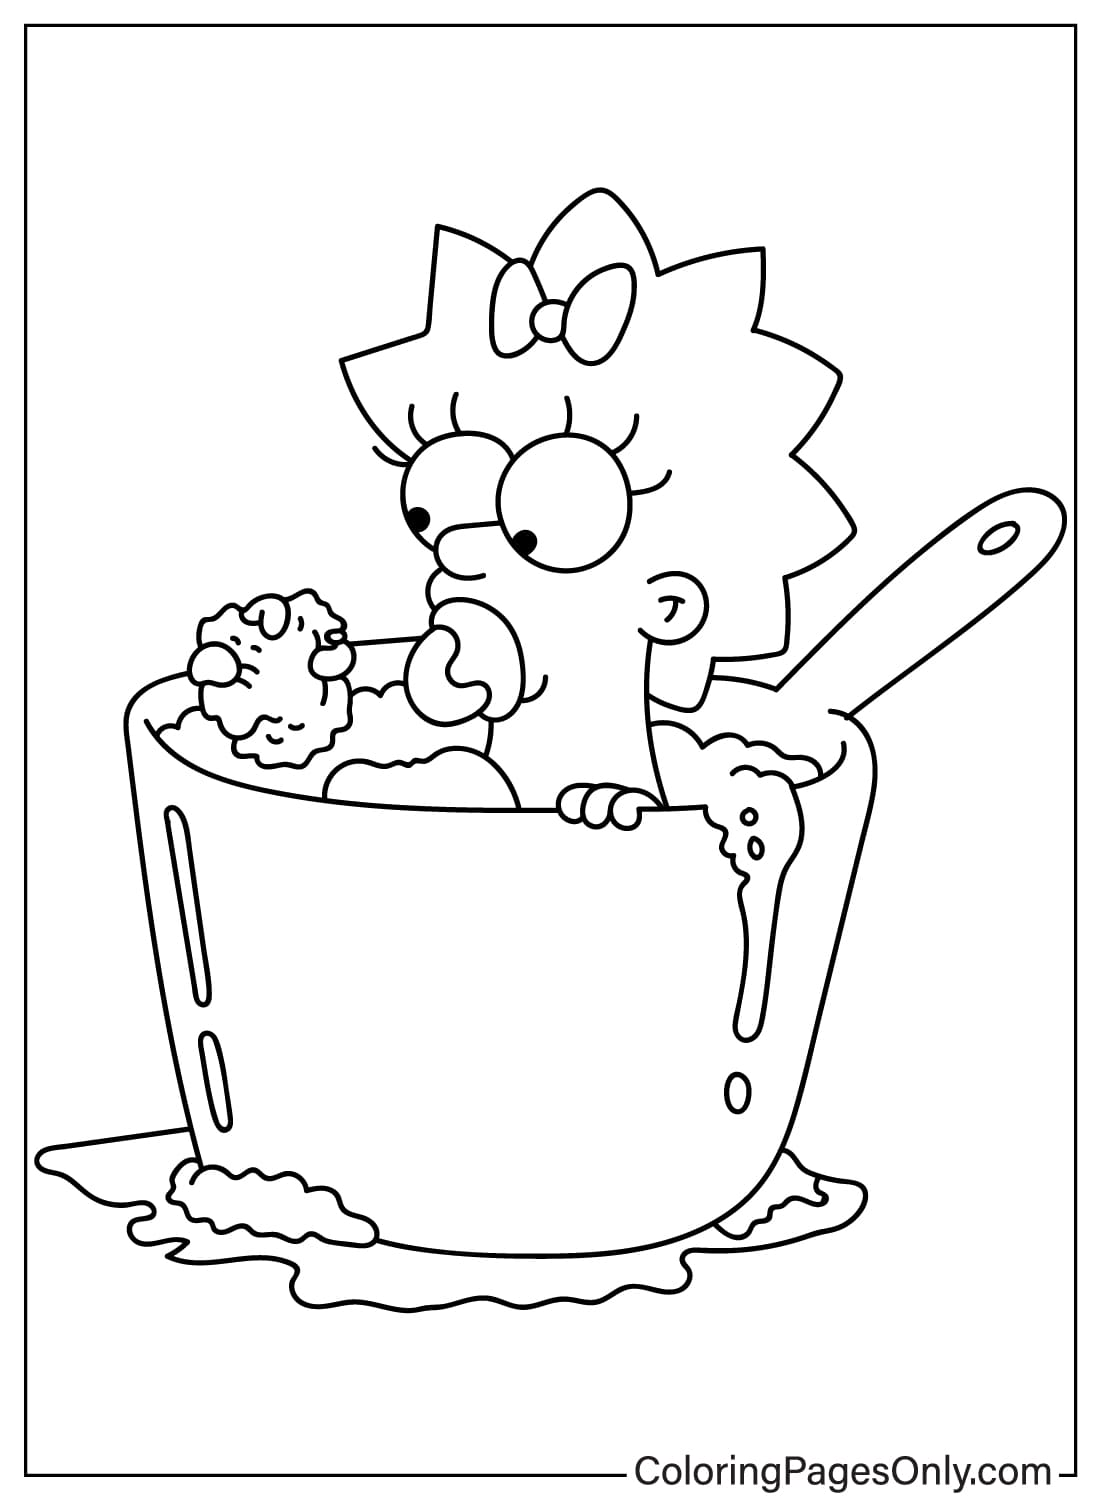 Maggie kleurplaat gratis van Simpsons